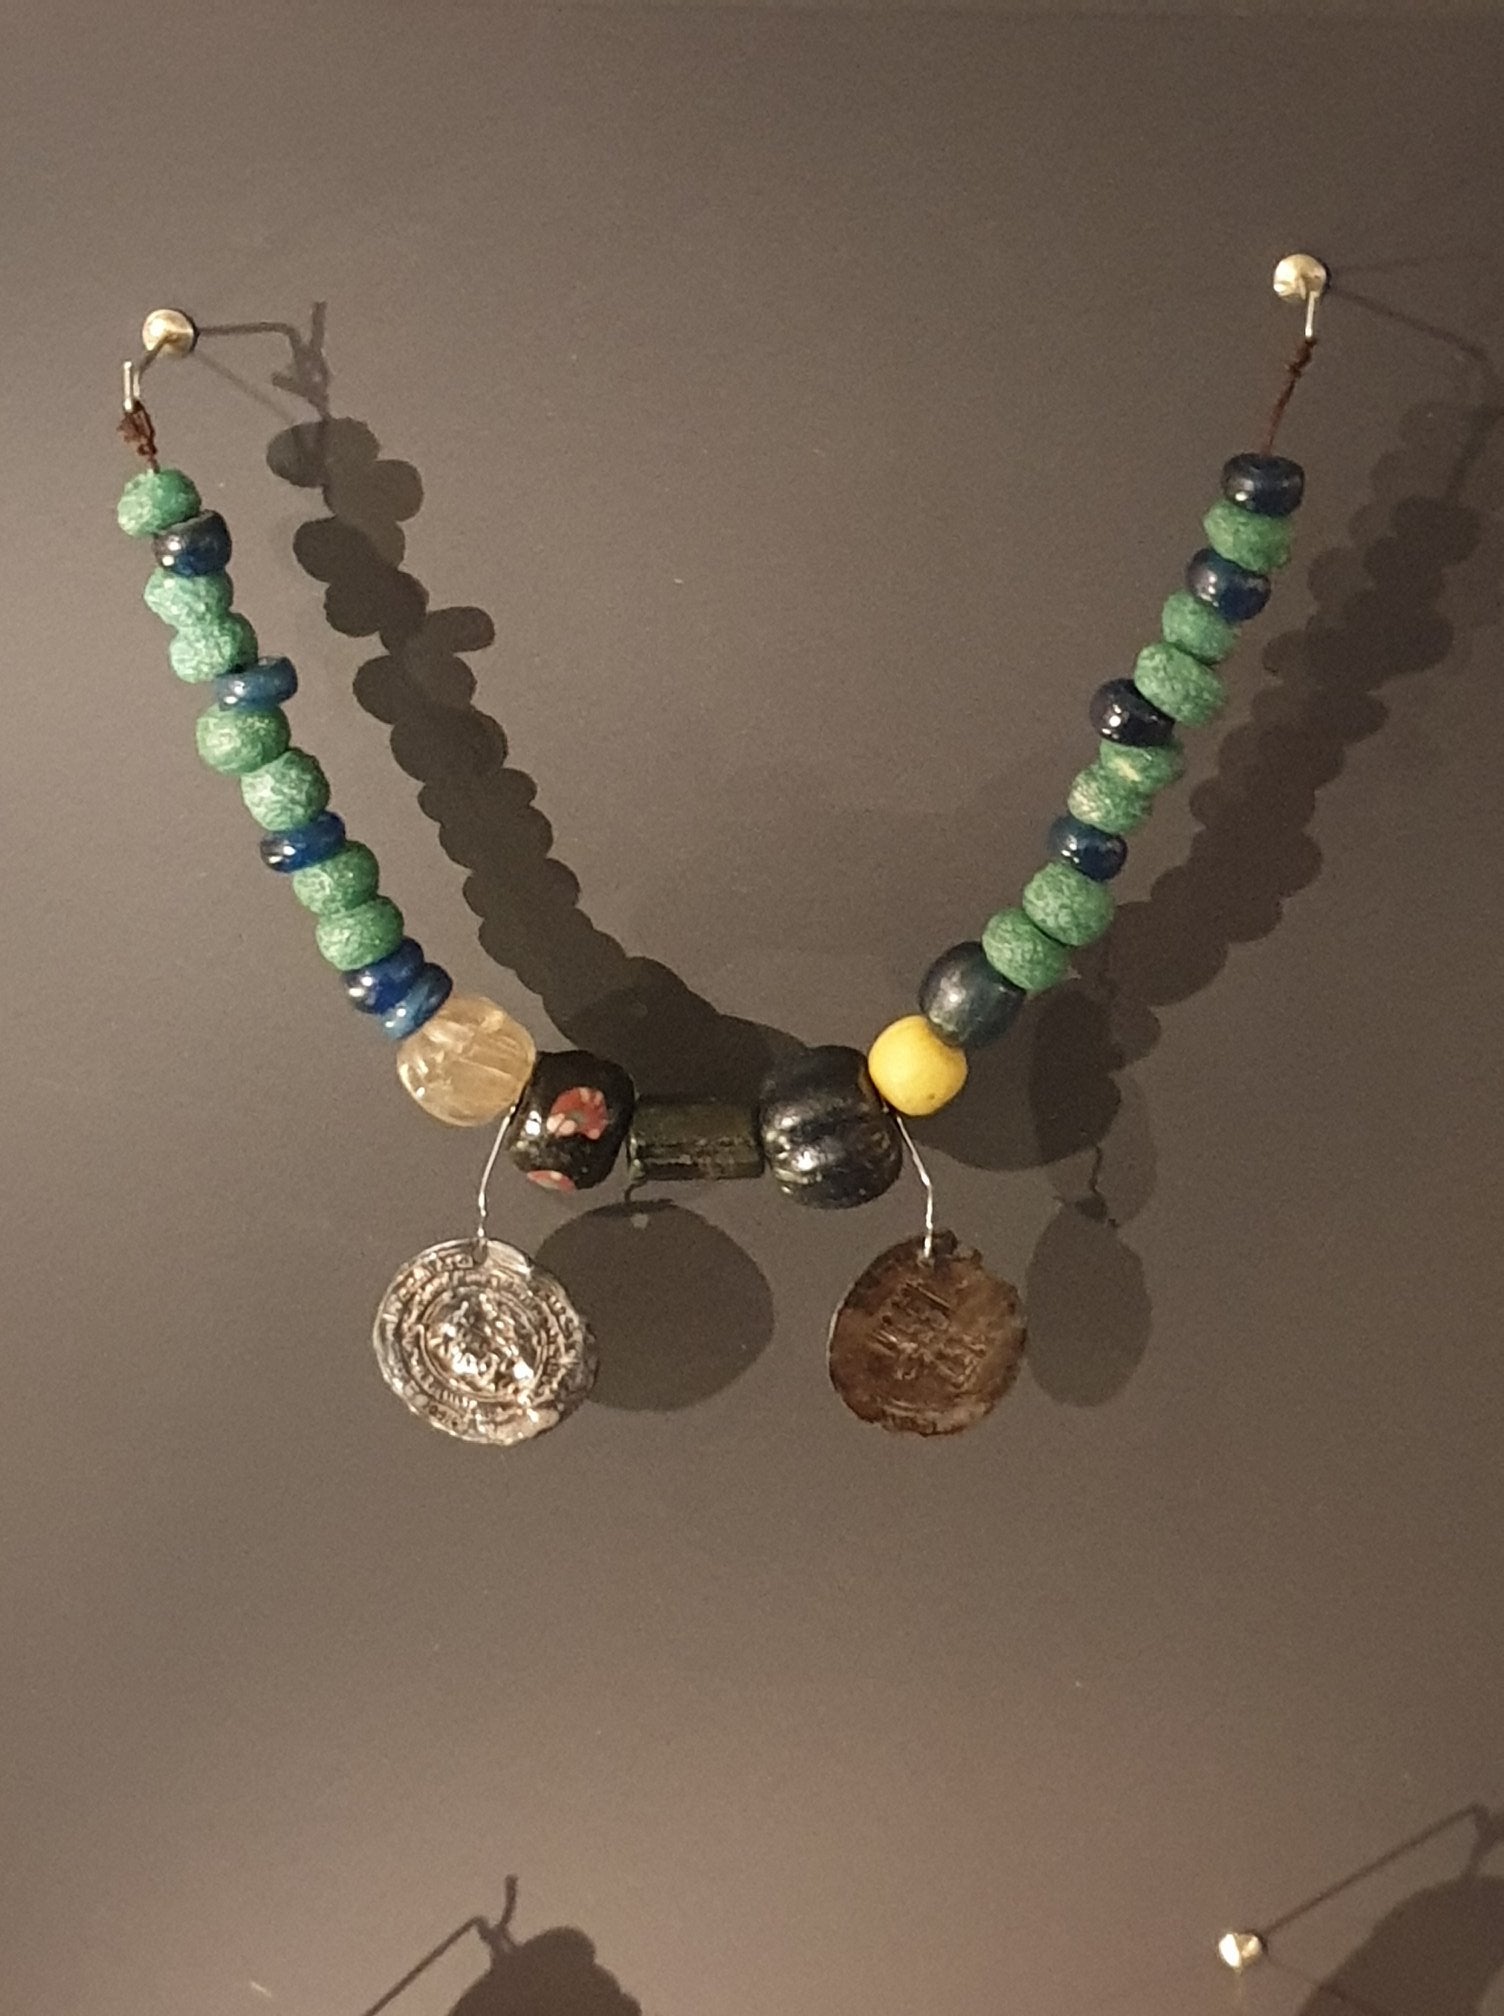 Beads (sörvistölur) from the Viking Age in Iceland